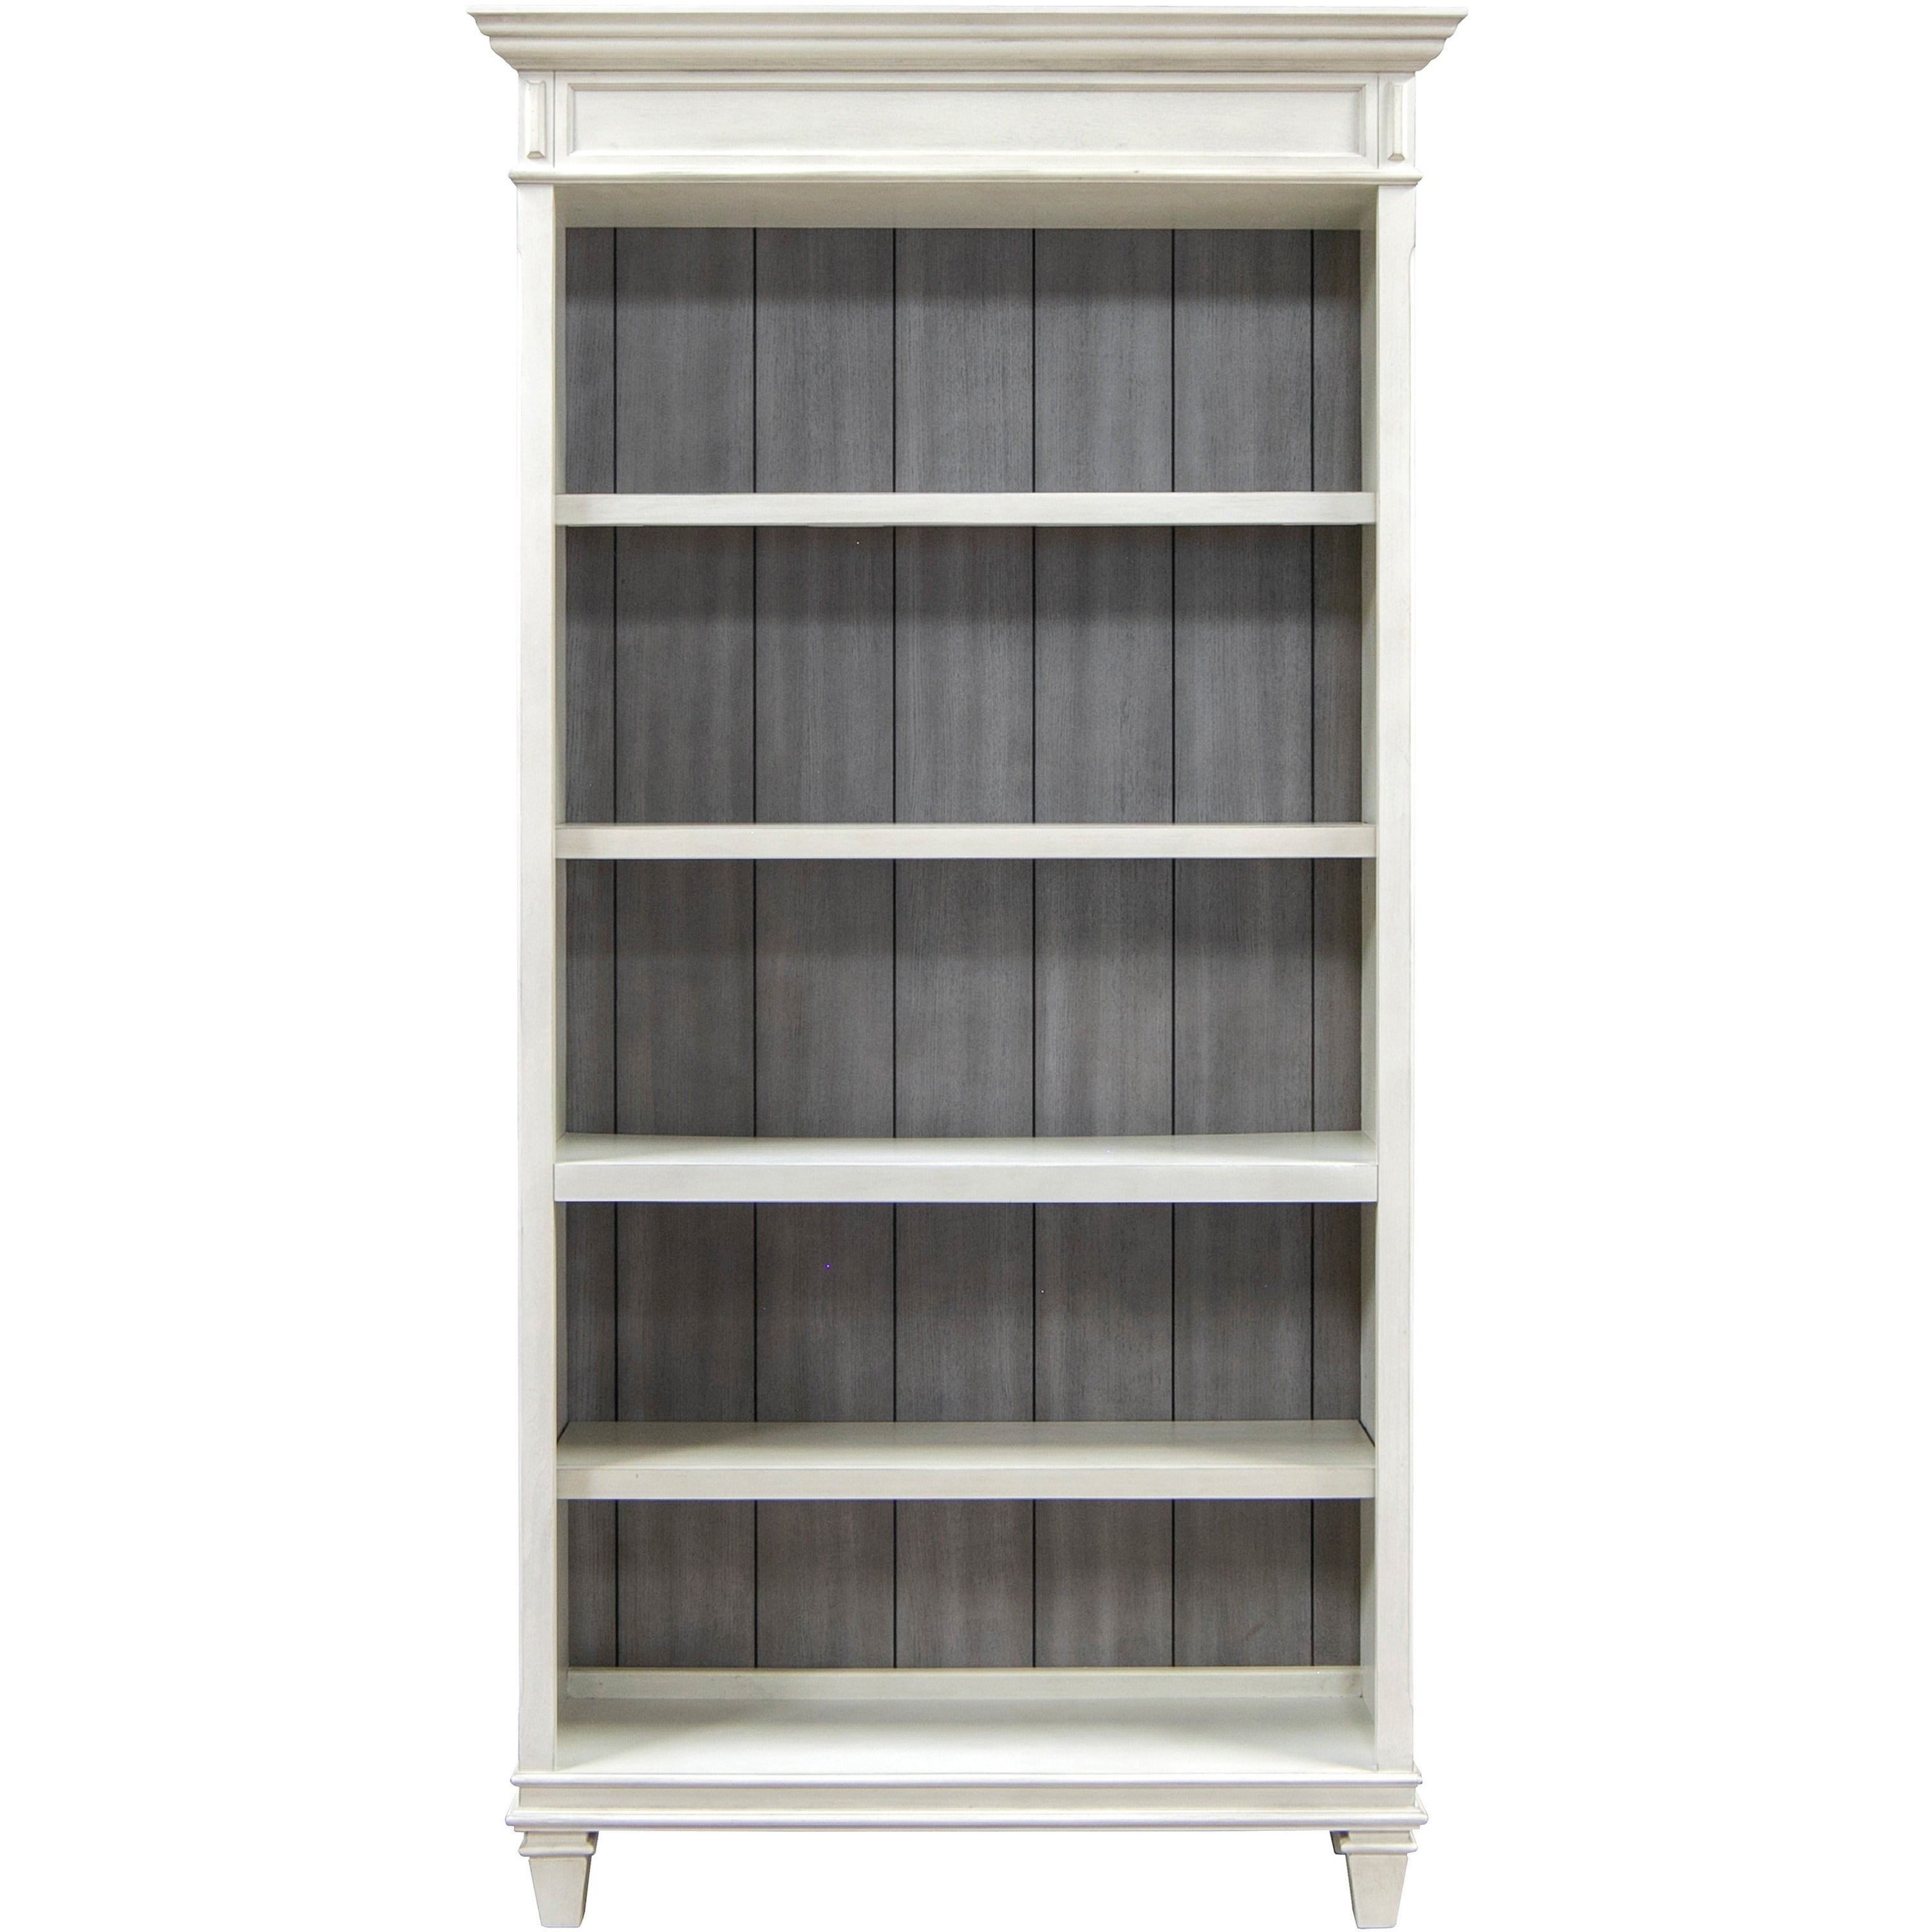 martin-hartford-open-bookcase-40-x-1478-5-shelves-3-adjustable-shelfves-material-natural-wood-wire-mesh-finish-vintage-linen_mrtimhf4078w - 1